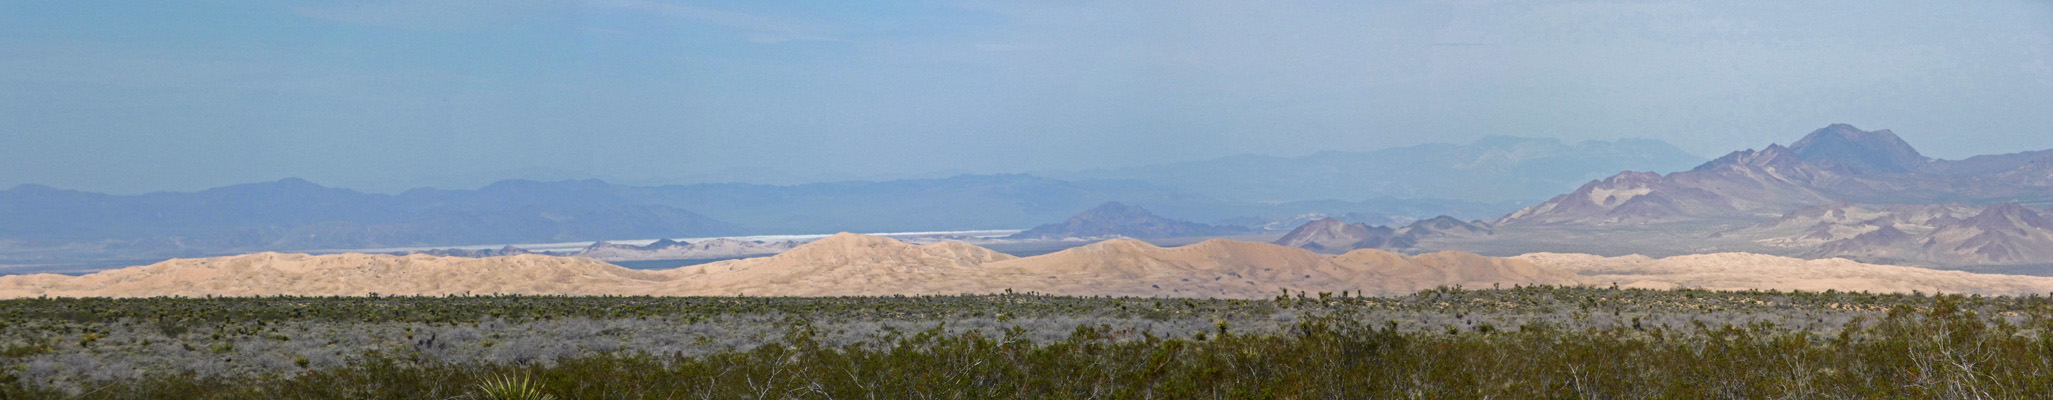 Kelso Dunes Mojave National Preserve